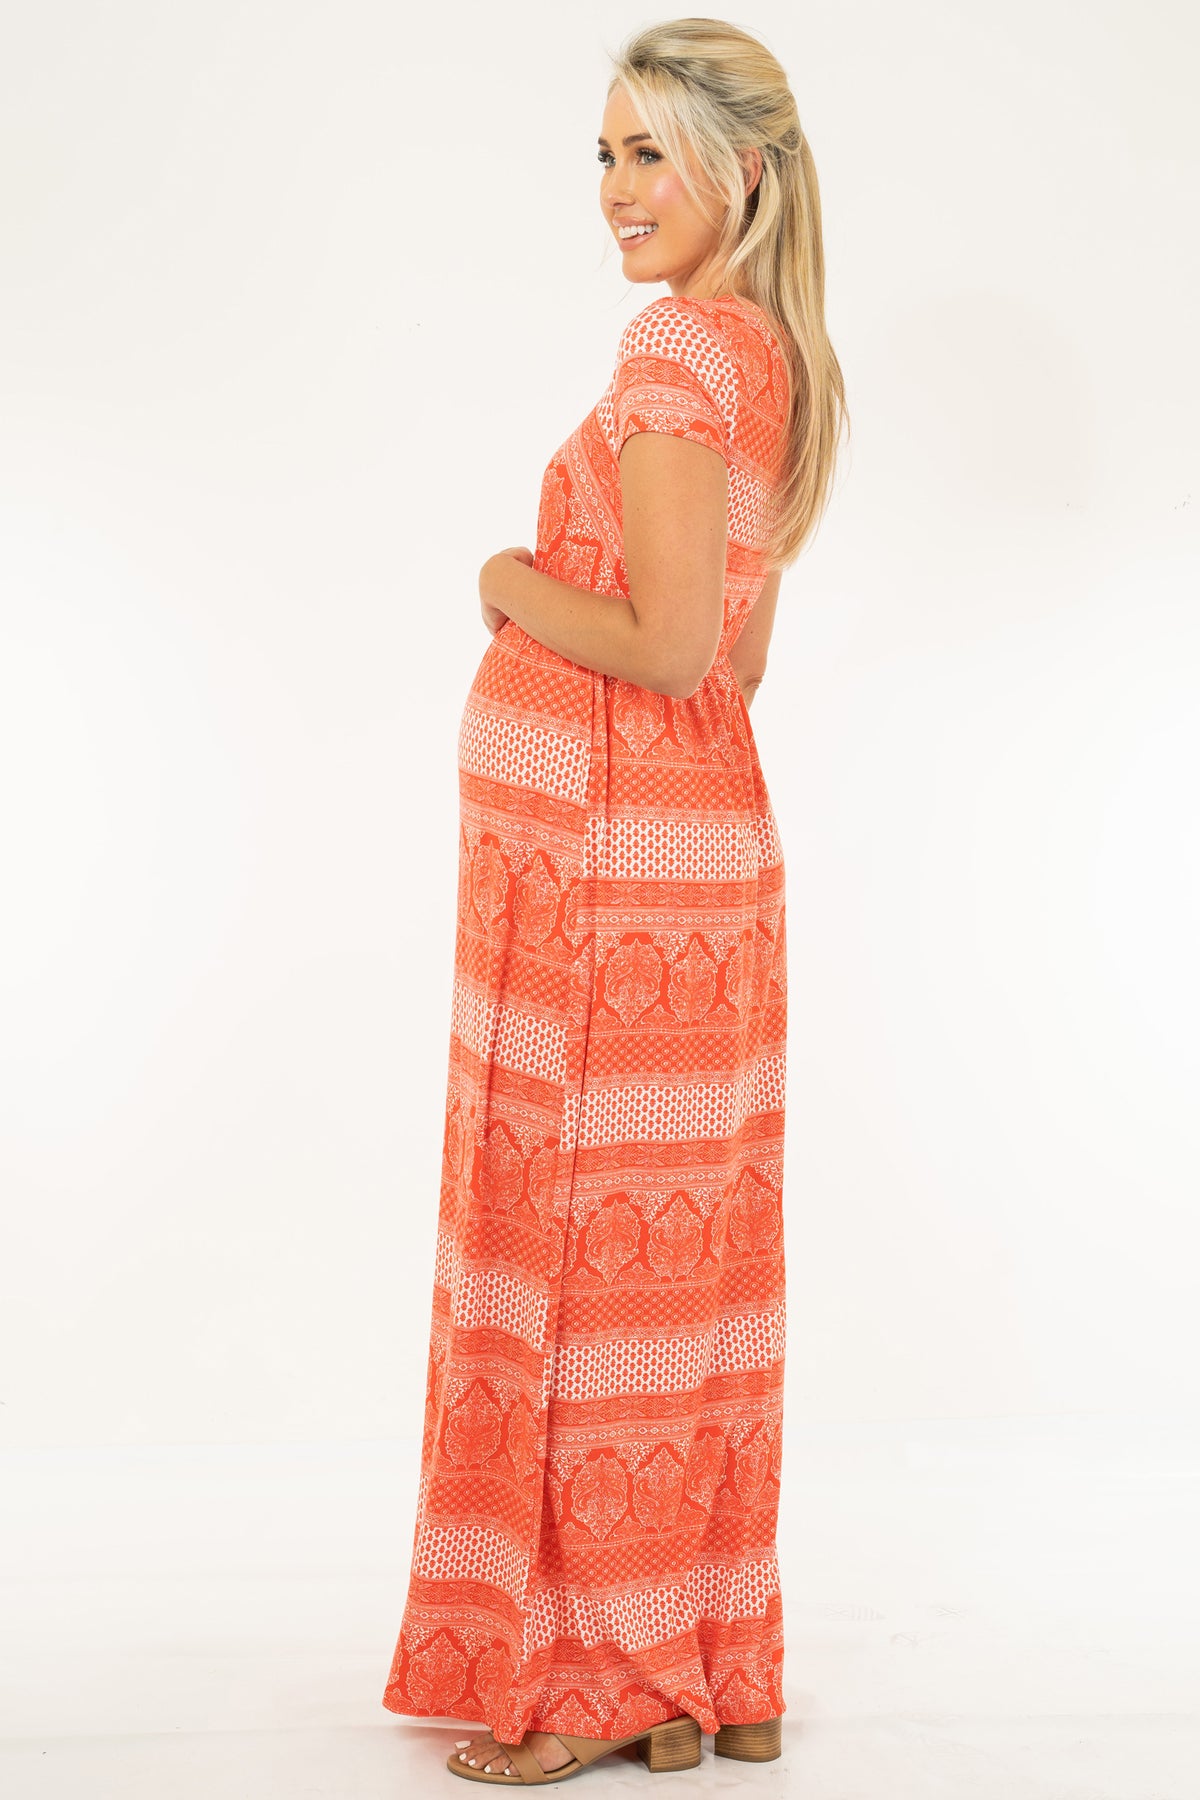 NWT - H&M MAMA beige tan Sleeveless Faux Wrap Maternity Dress - Large –  CommunityWorx Thrift Online